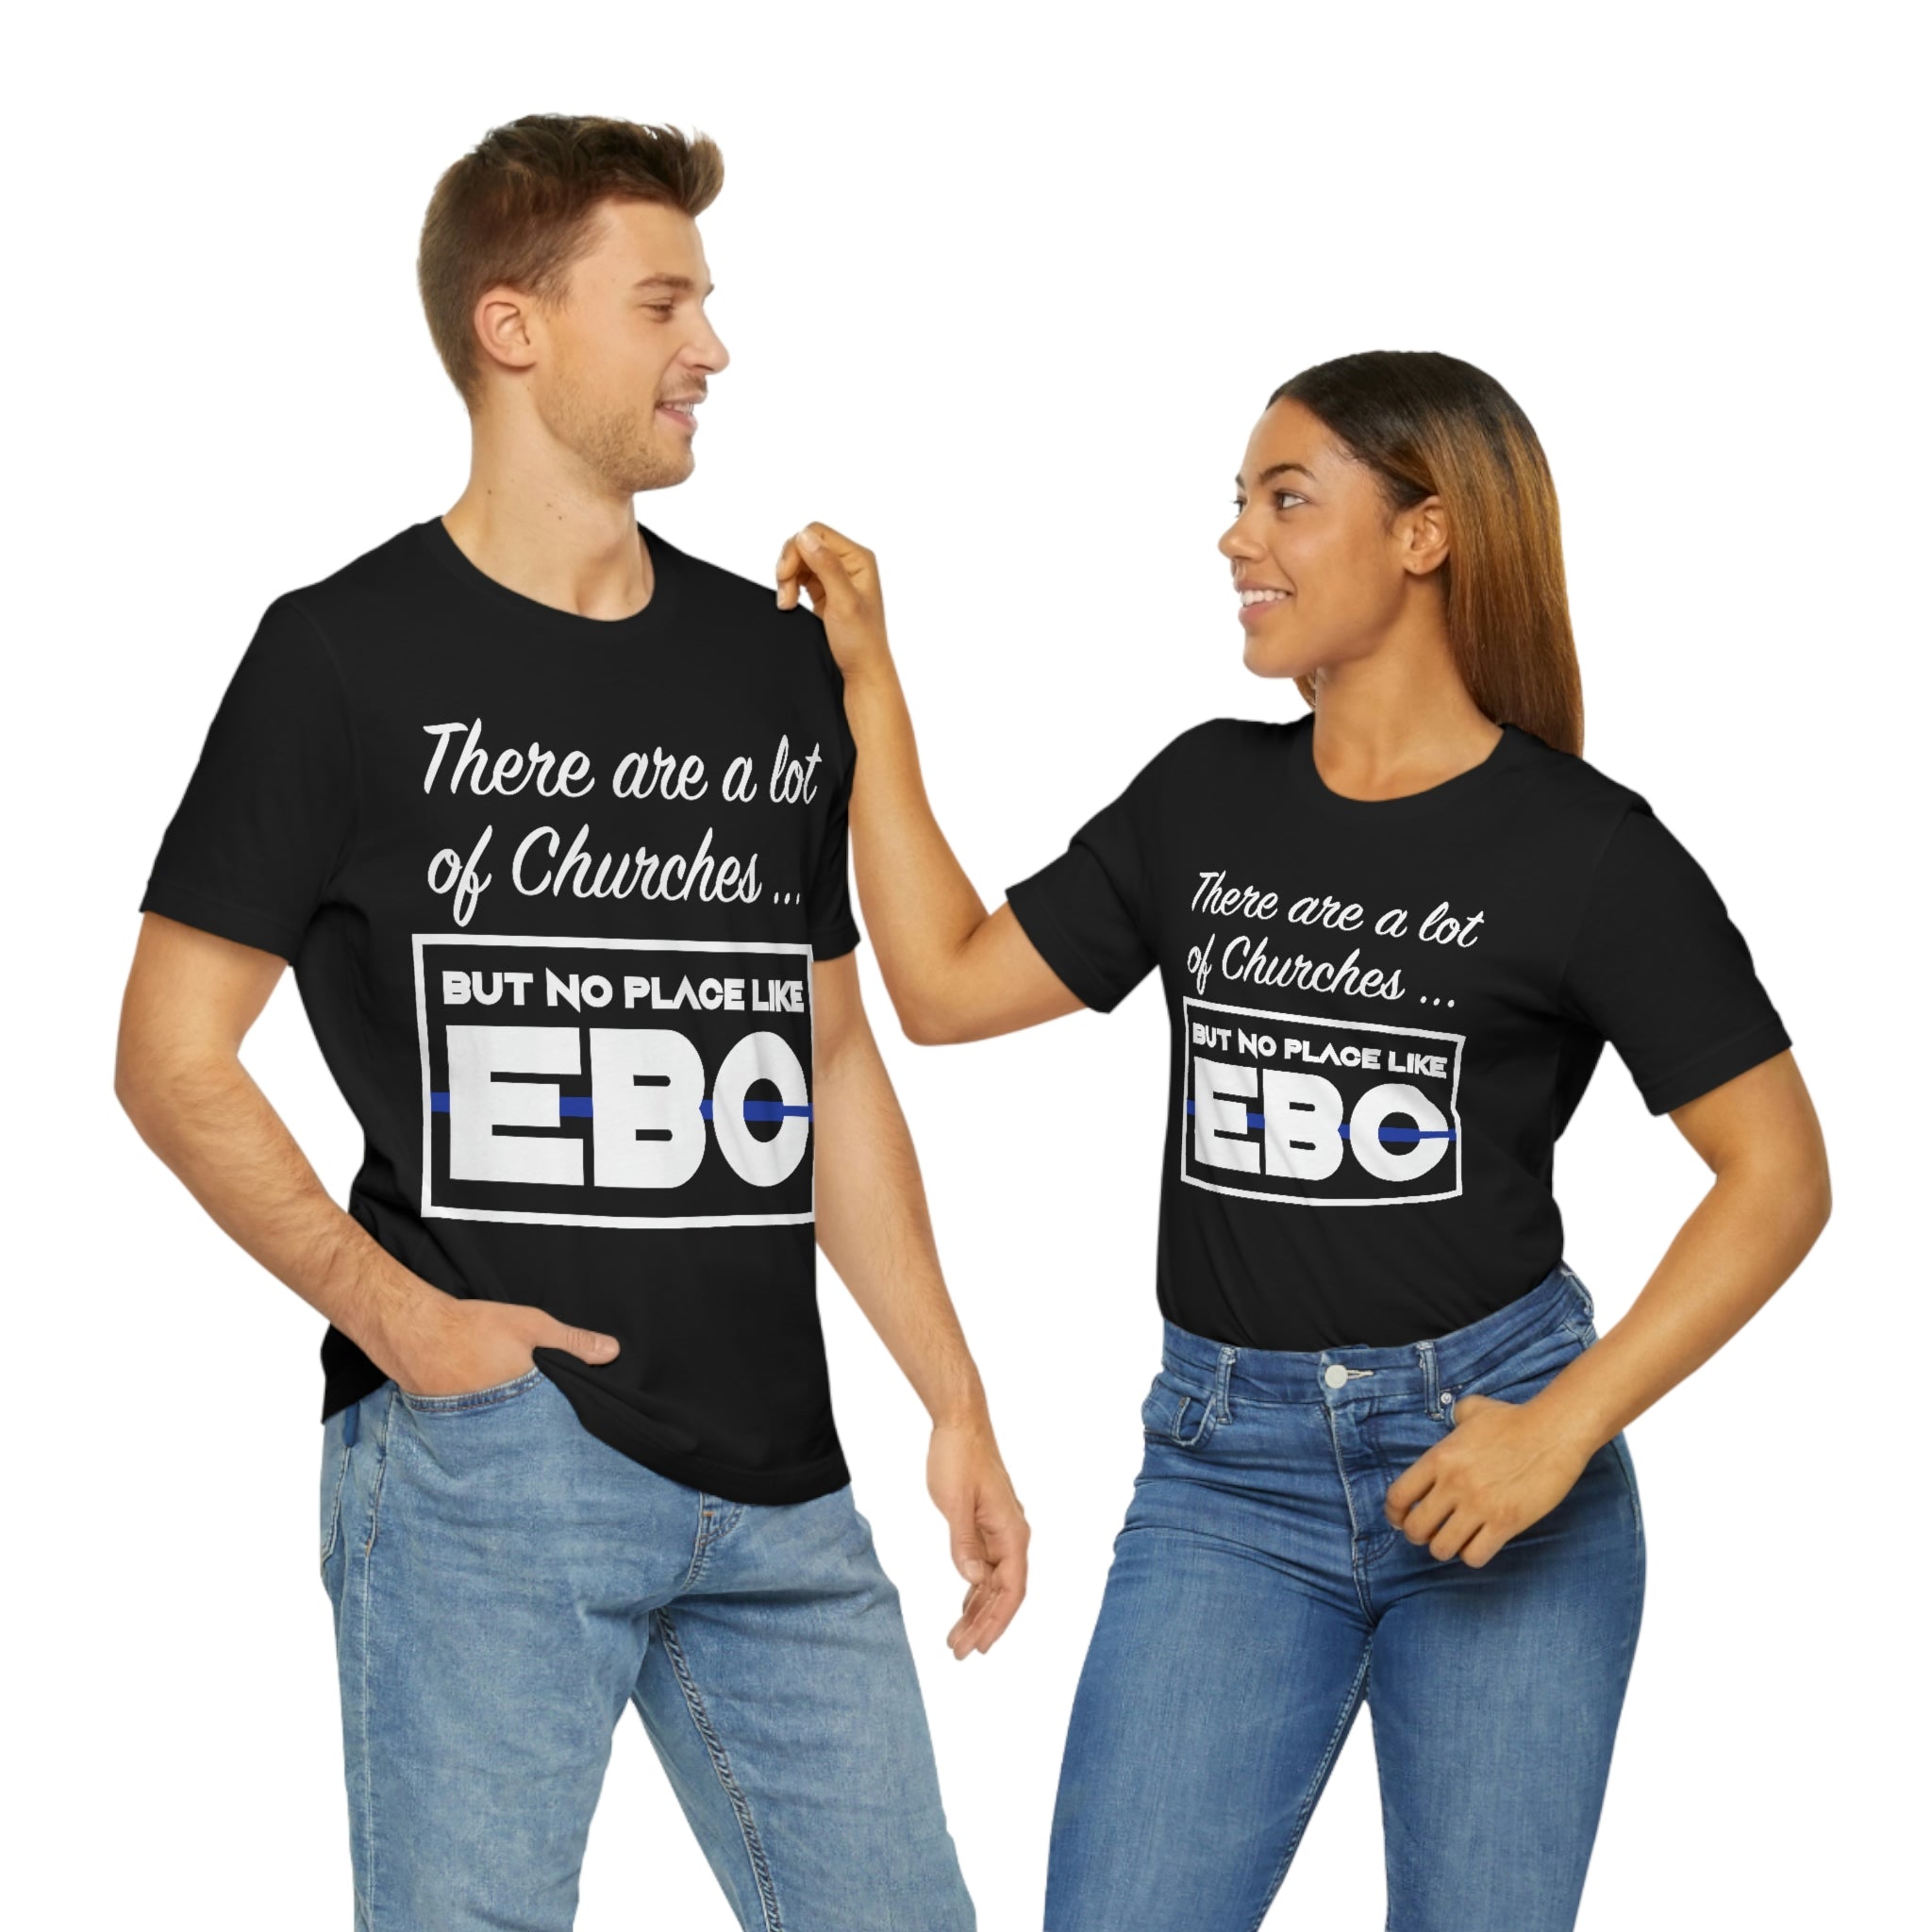 No Place Like EBC Shirt